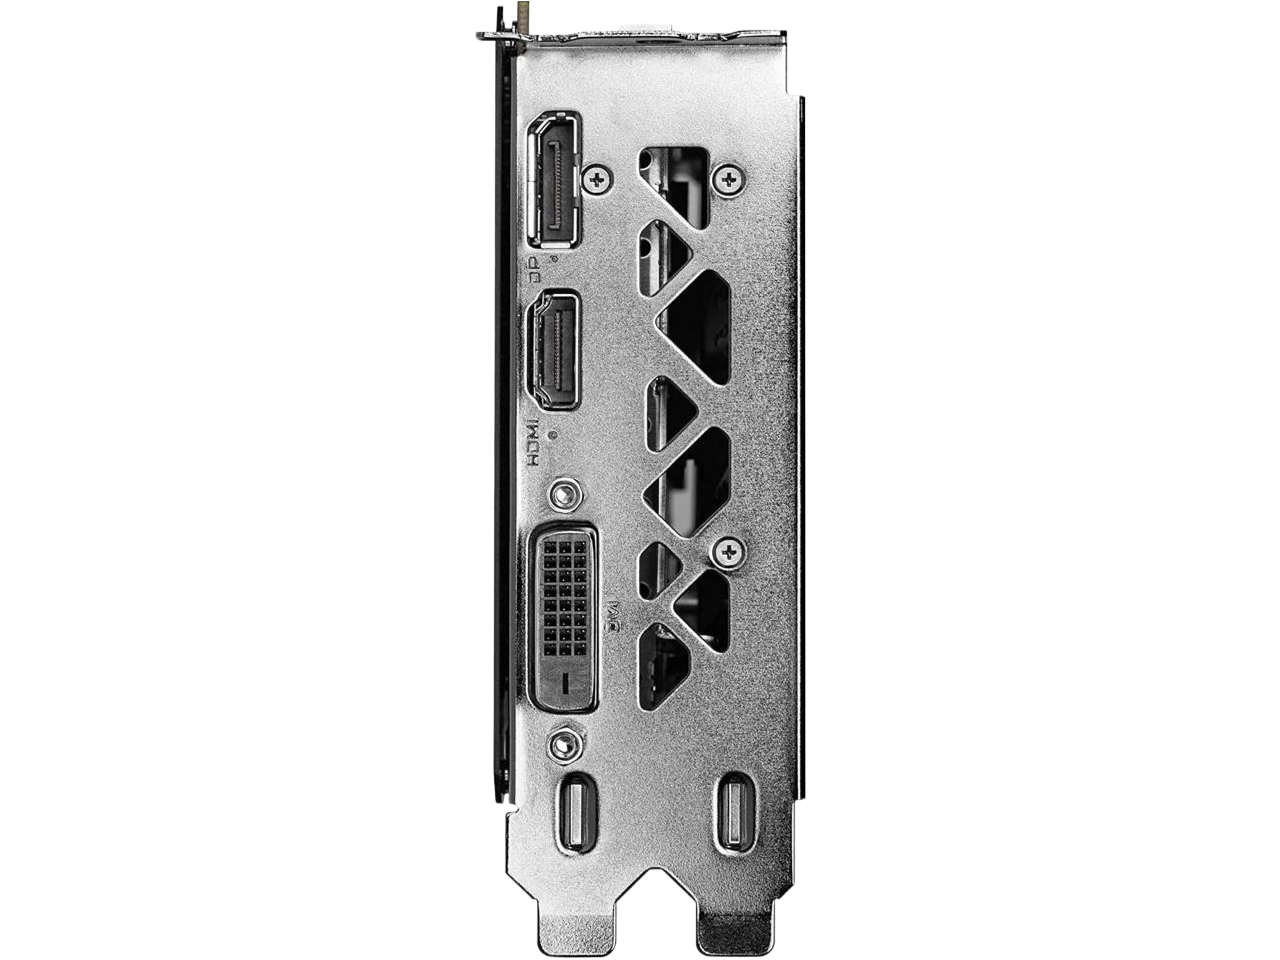 EVGA GeForce RTX 2060 12GB XC Black Gaming 12GB GDDR6 Dual Fans Metal Backplate Video Graphics Card 12G-P4-2261-KR